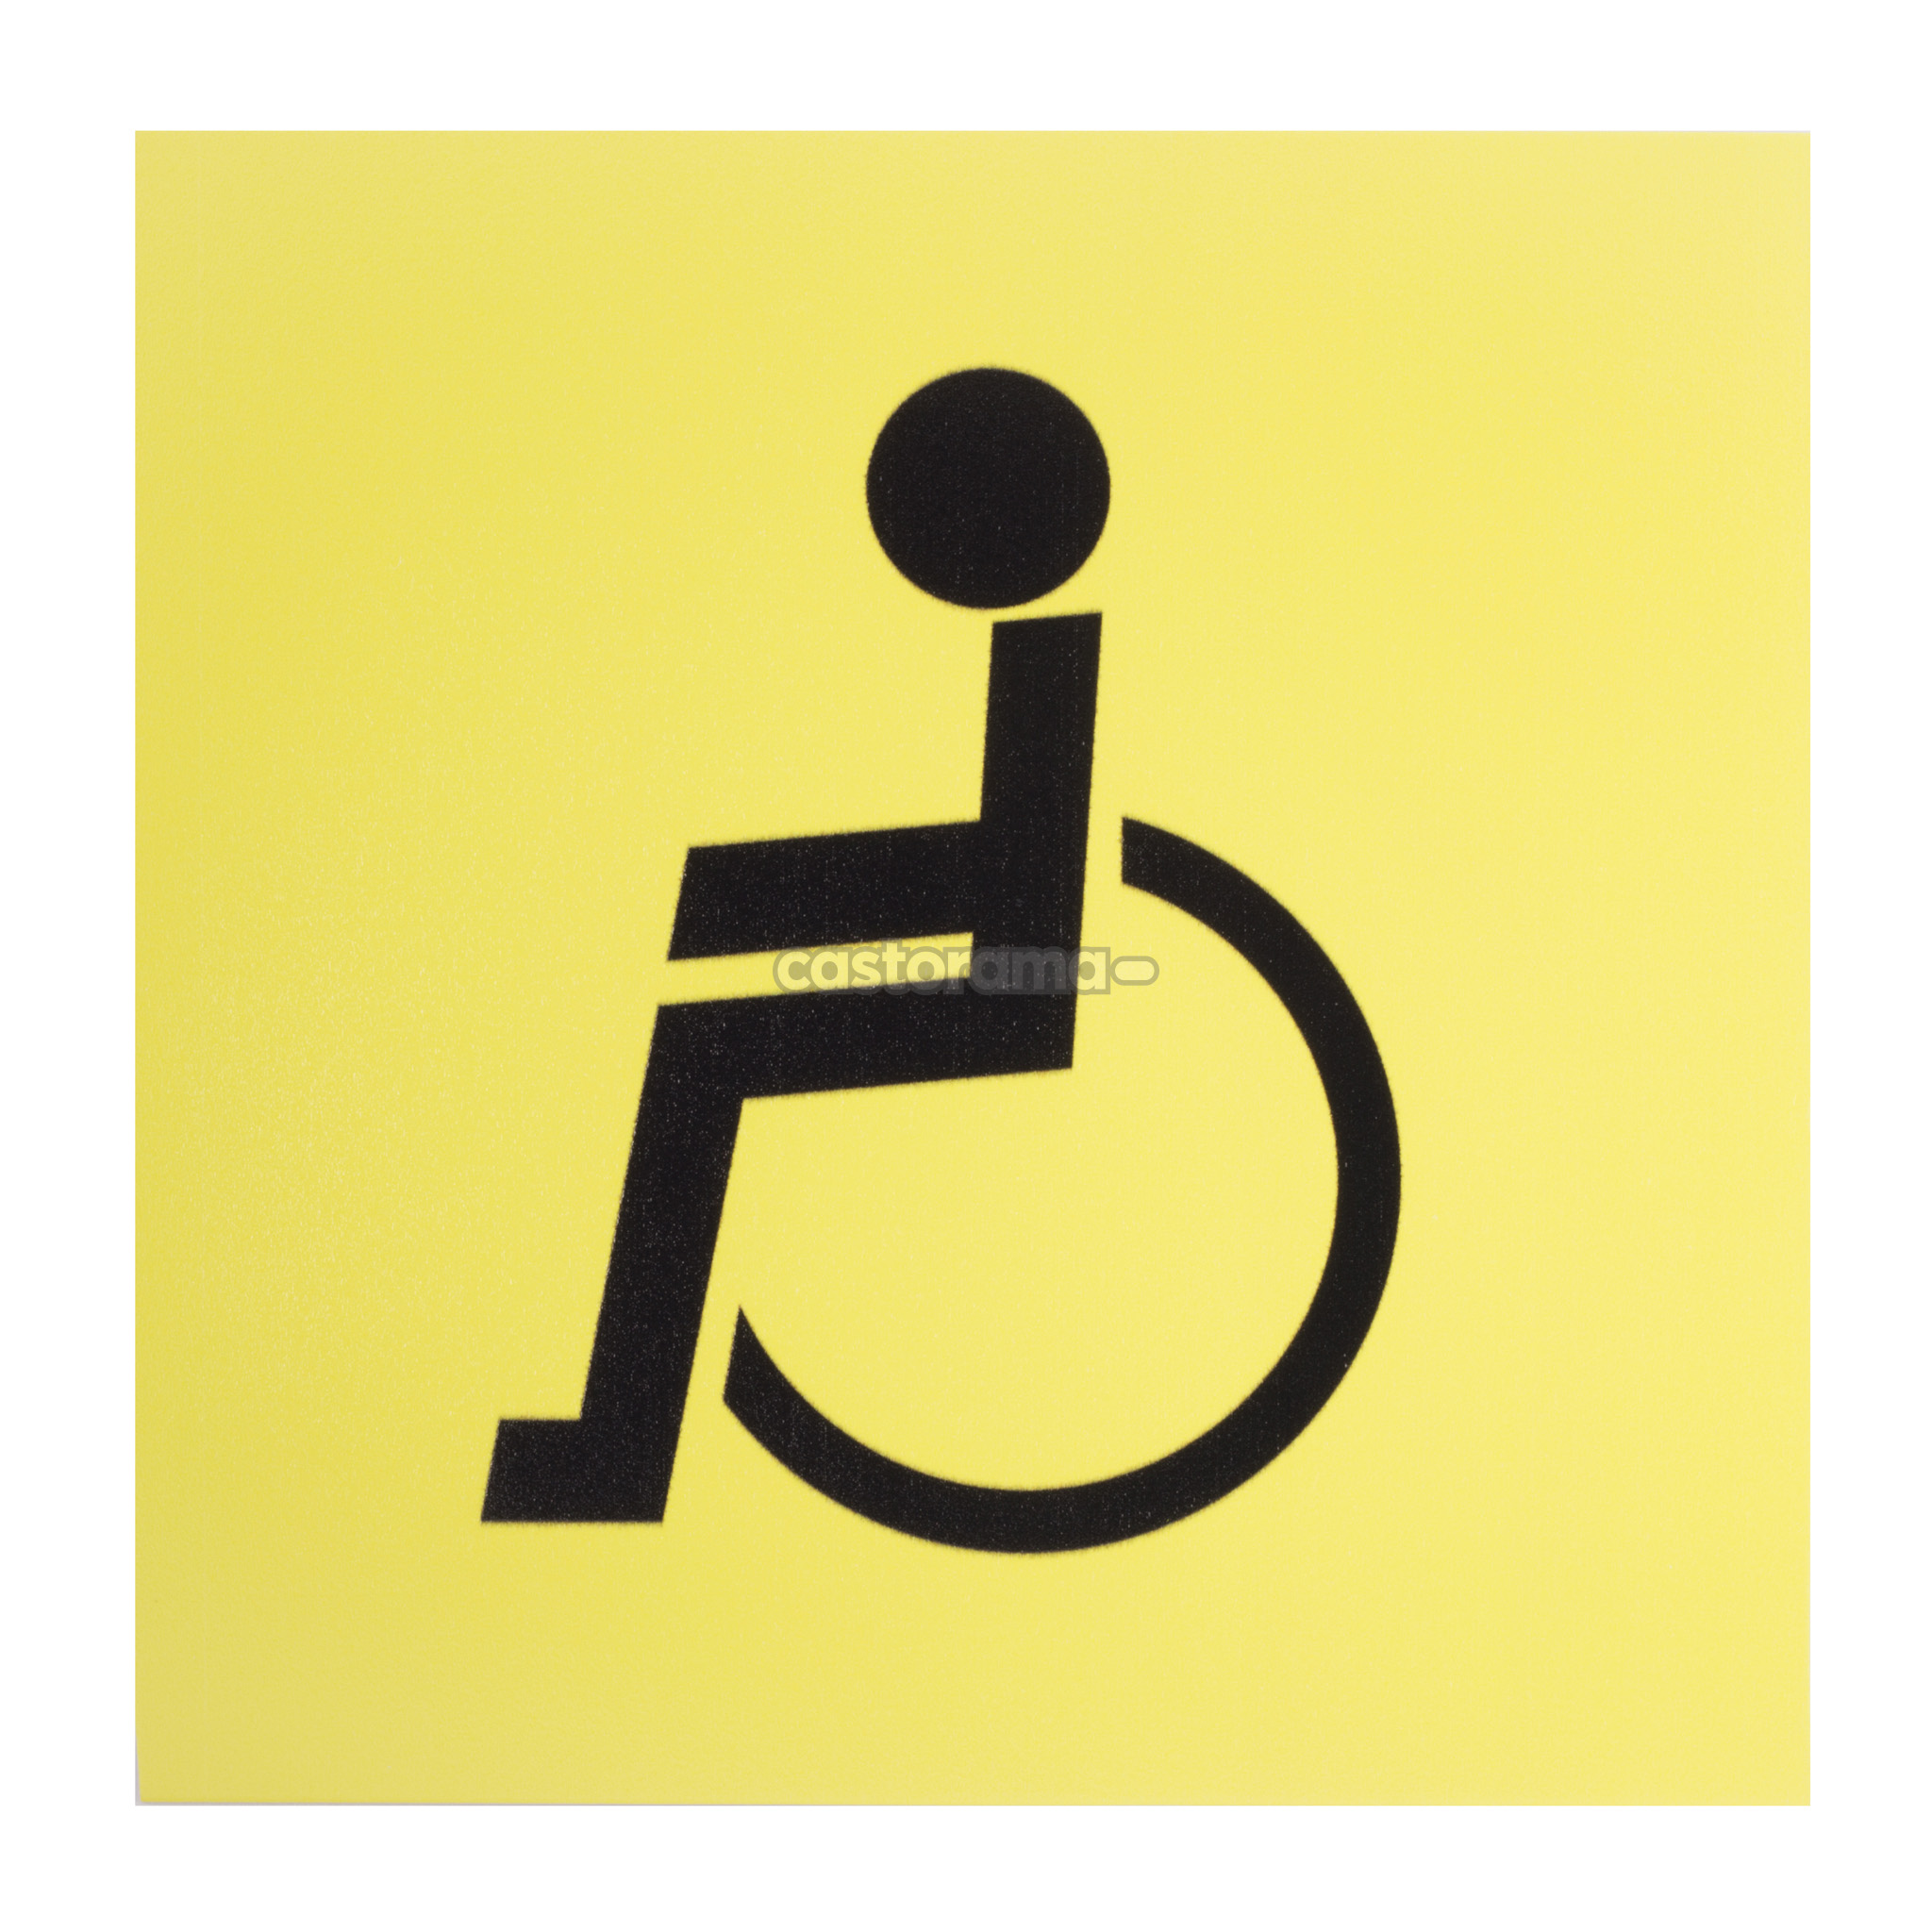 Новый знак инвалида на машину. Дорожный знак инвалид 8.17. Наклейка инвалид d150х150мм. Табличка для инвалидов. Желтая табличка для инвалидов.